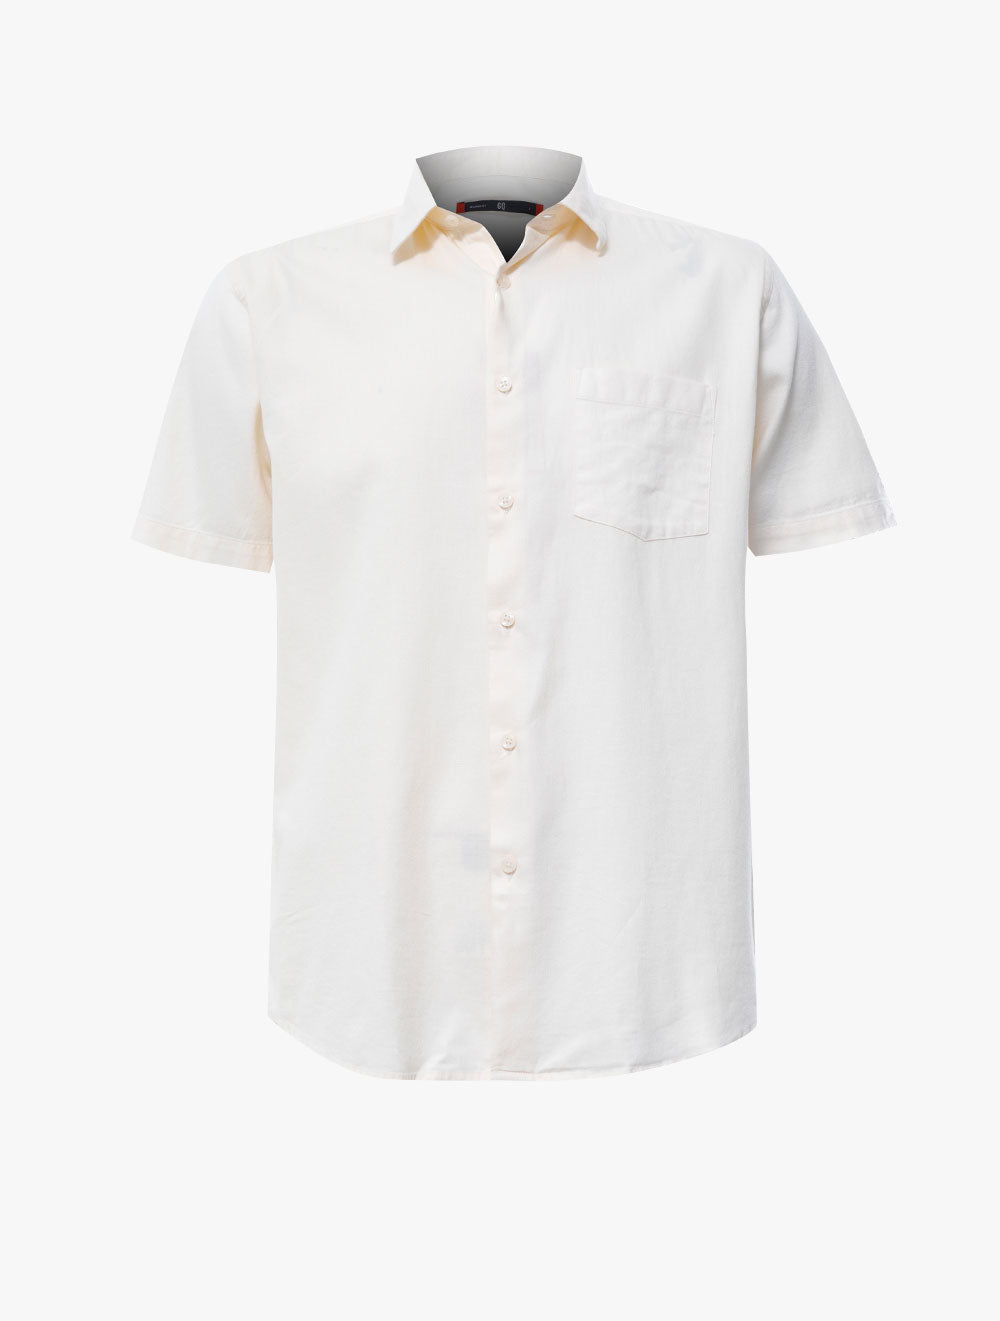 GQ
Casual Short Sleeve Shirt - 1623016